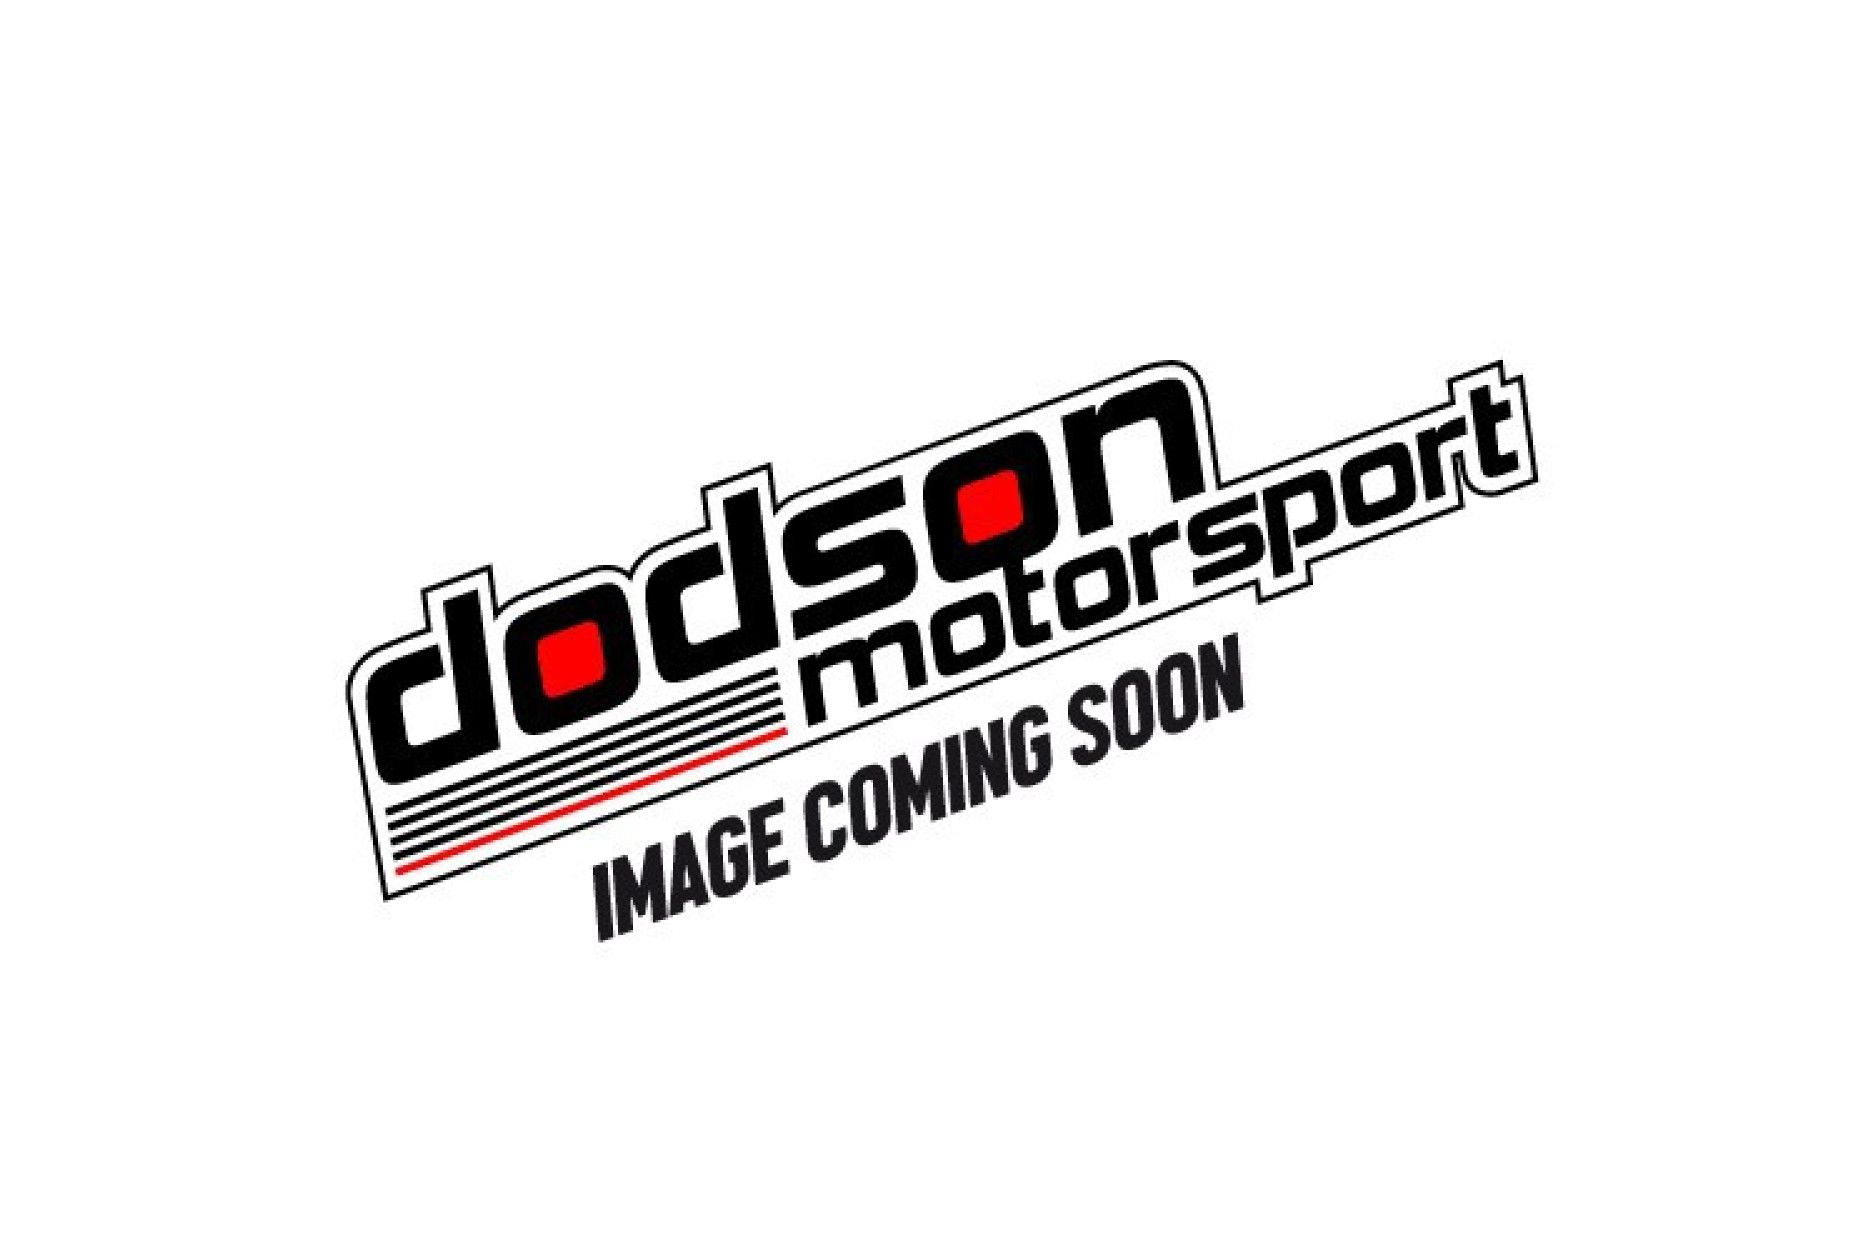 Dodson Motor Öl Temperatur-Schalter ( 85 deg THERMOSTAT ) Nissan GTR R35